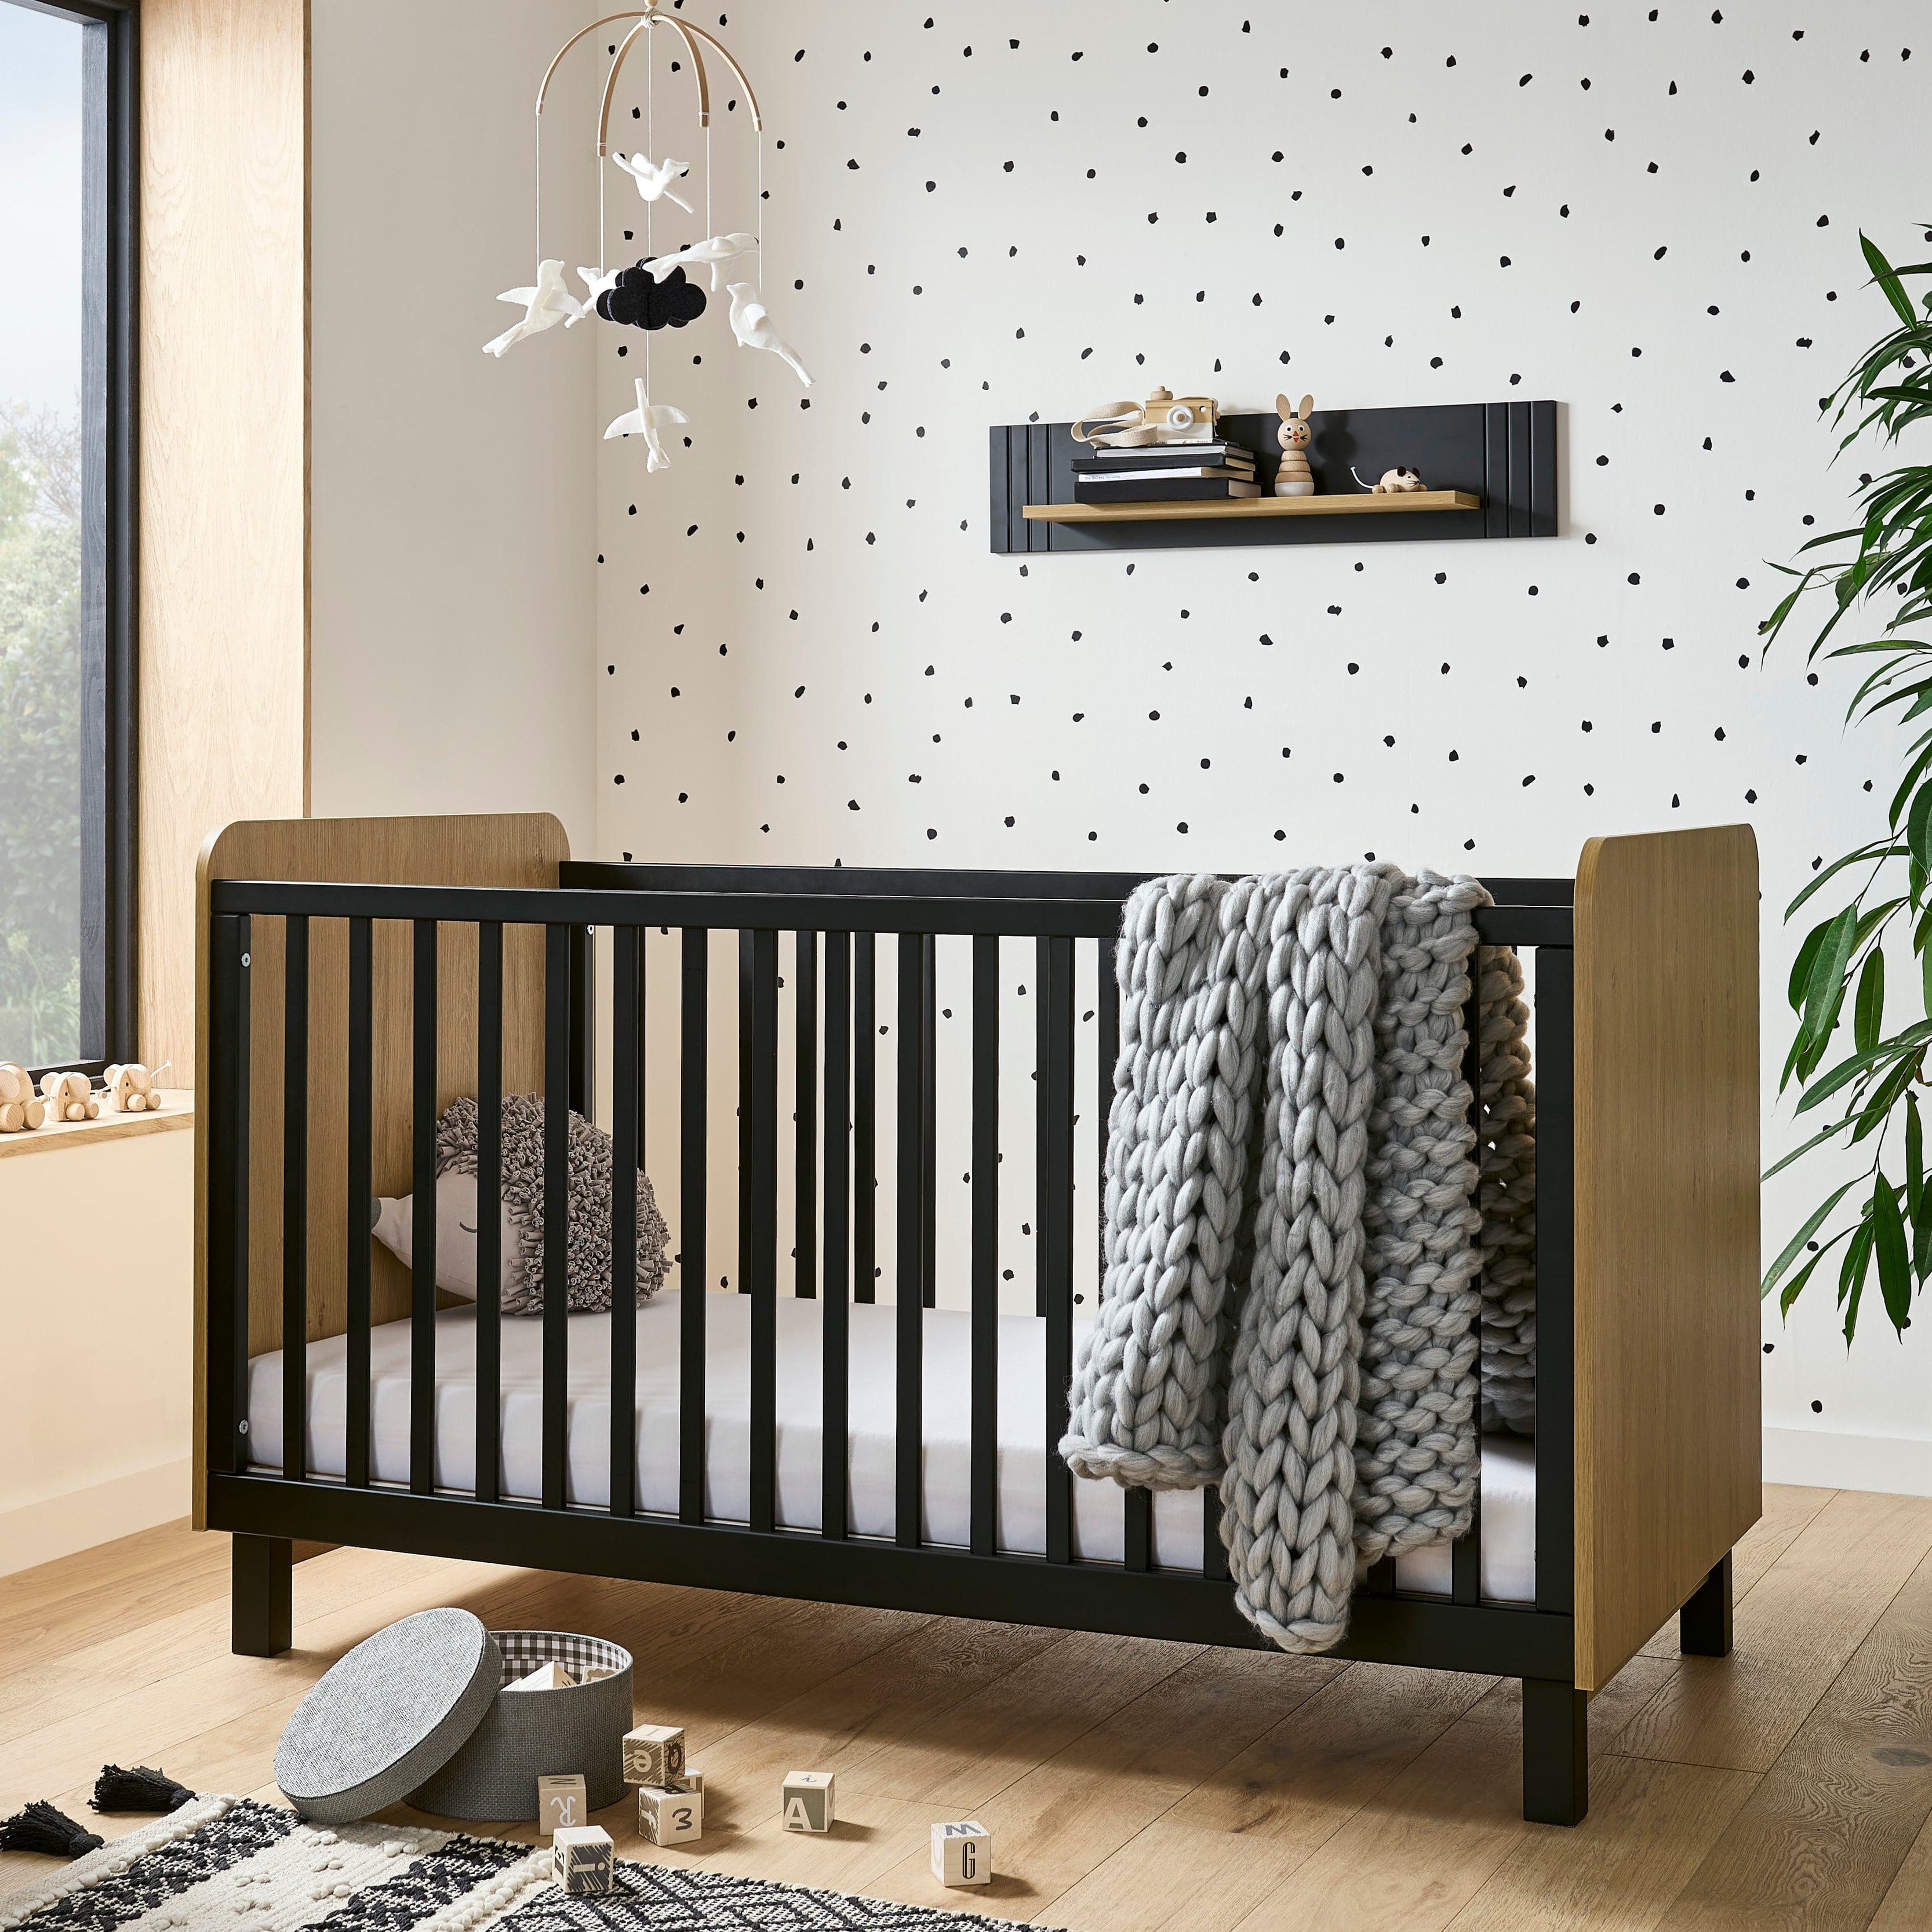 Cuddleco Rafi 5 Piece Nursery Furniture Set - Oak & Black - For Your Little One